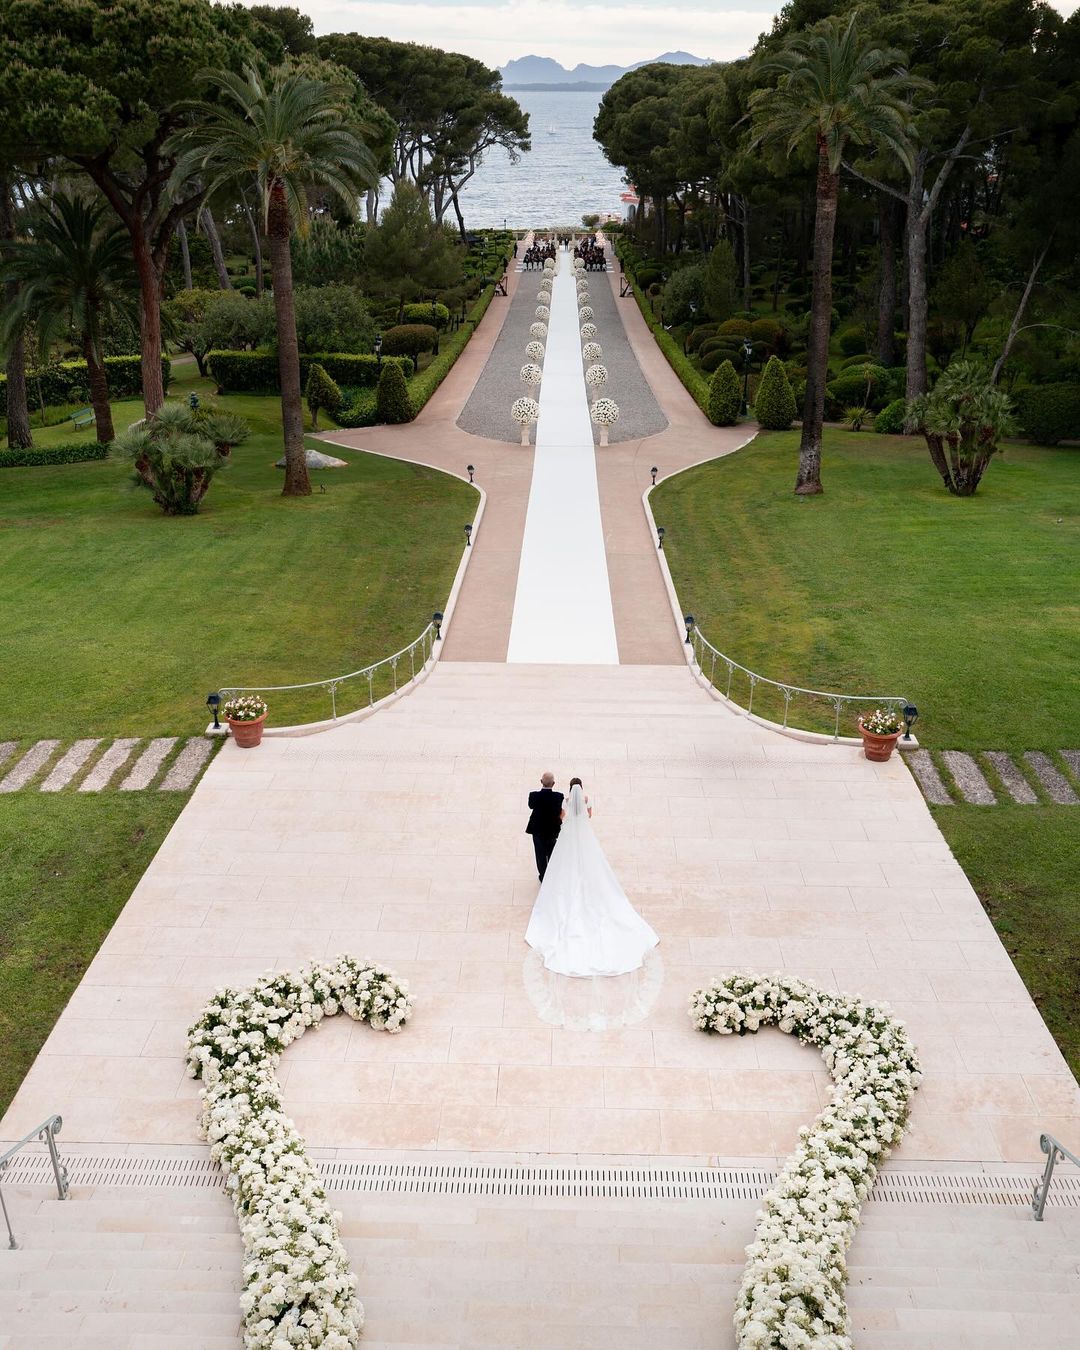 Raskošno vjenčanje na jugu Francuske: Hotel du Cap-Eden-Roc je omiljena wedding destinacija